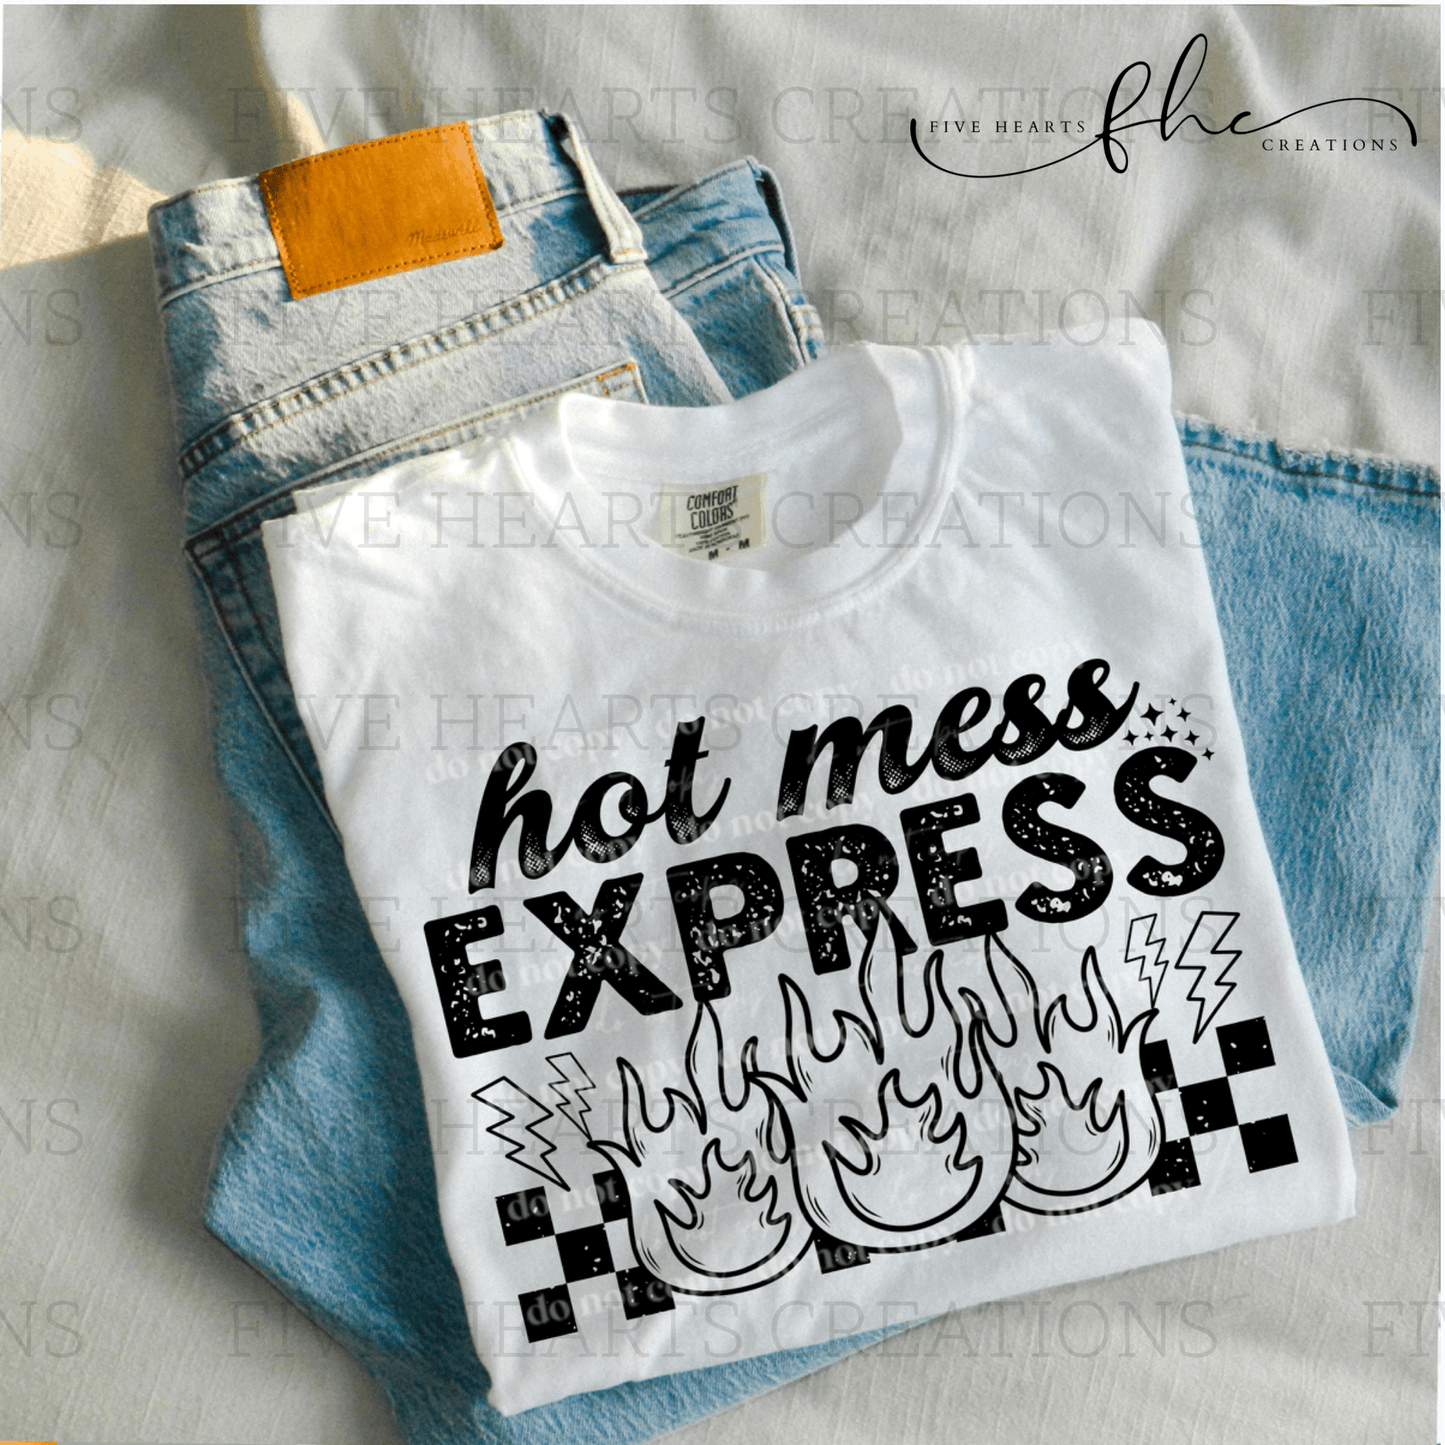 Hot mess express